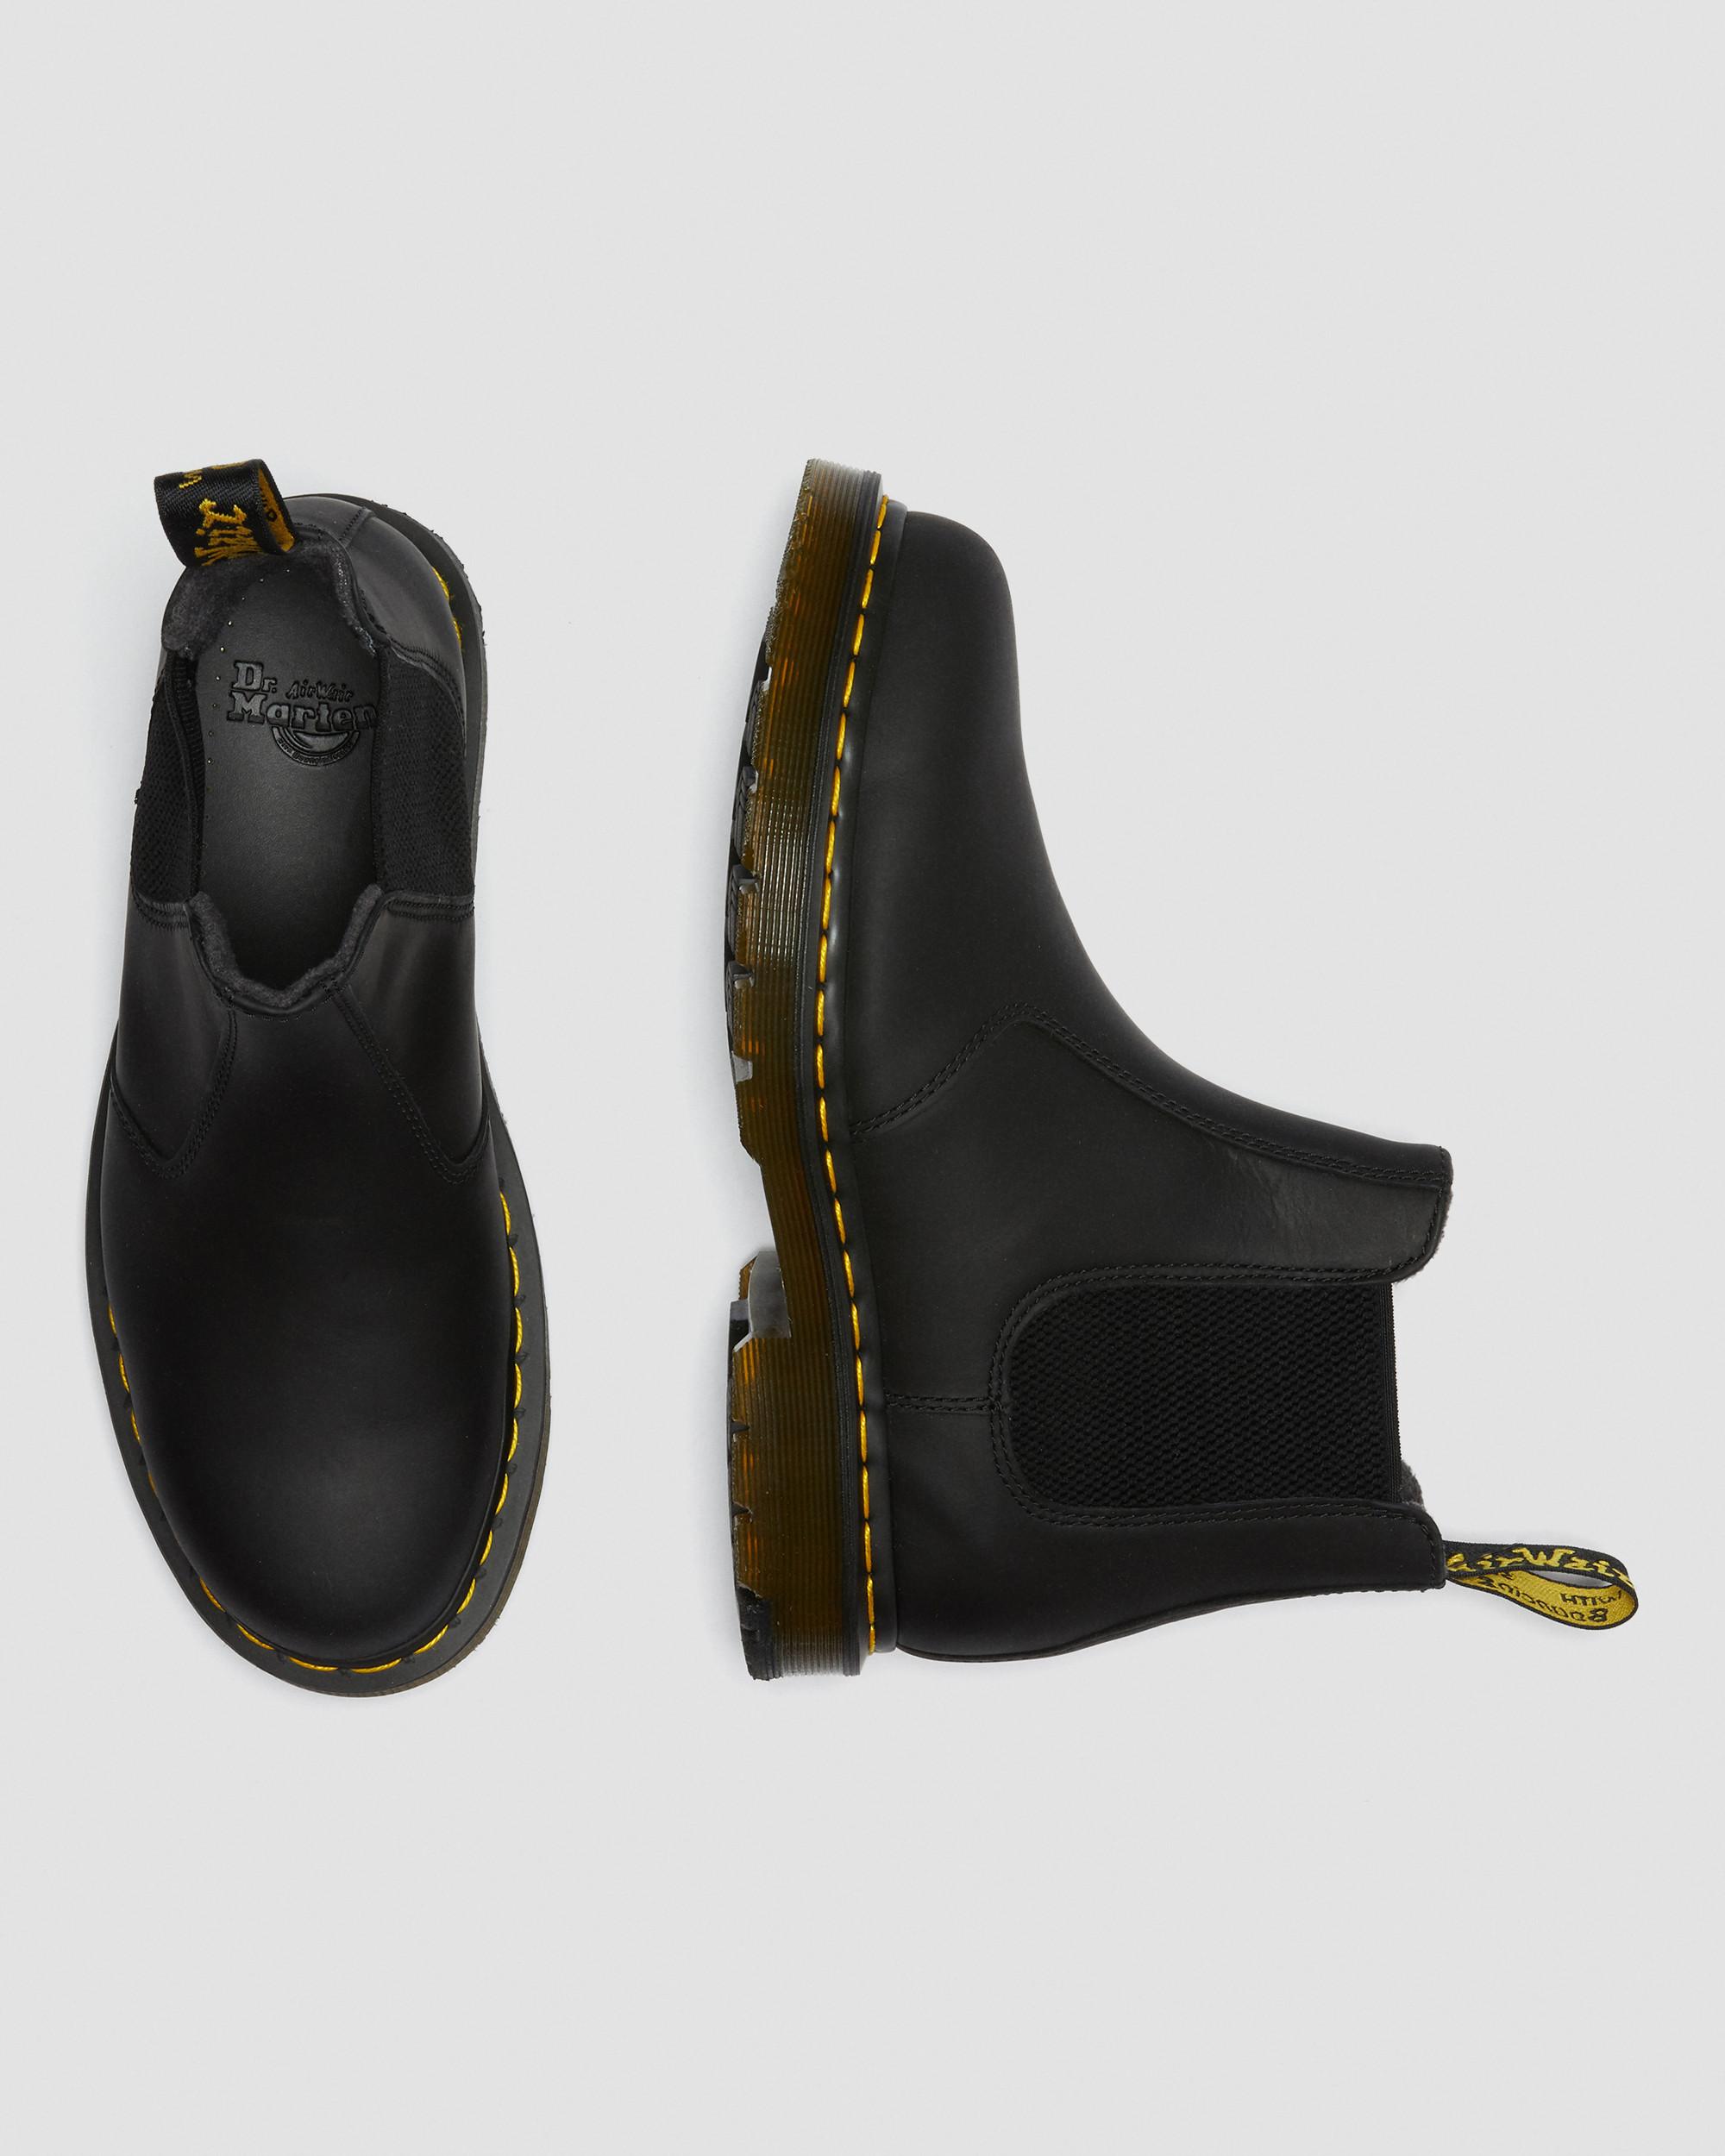 2976 DM's Wintergrip Chelsea Boots in Black | Dr. Martens